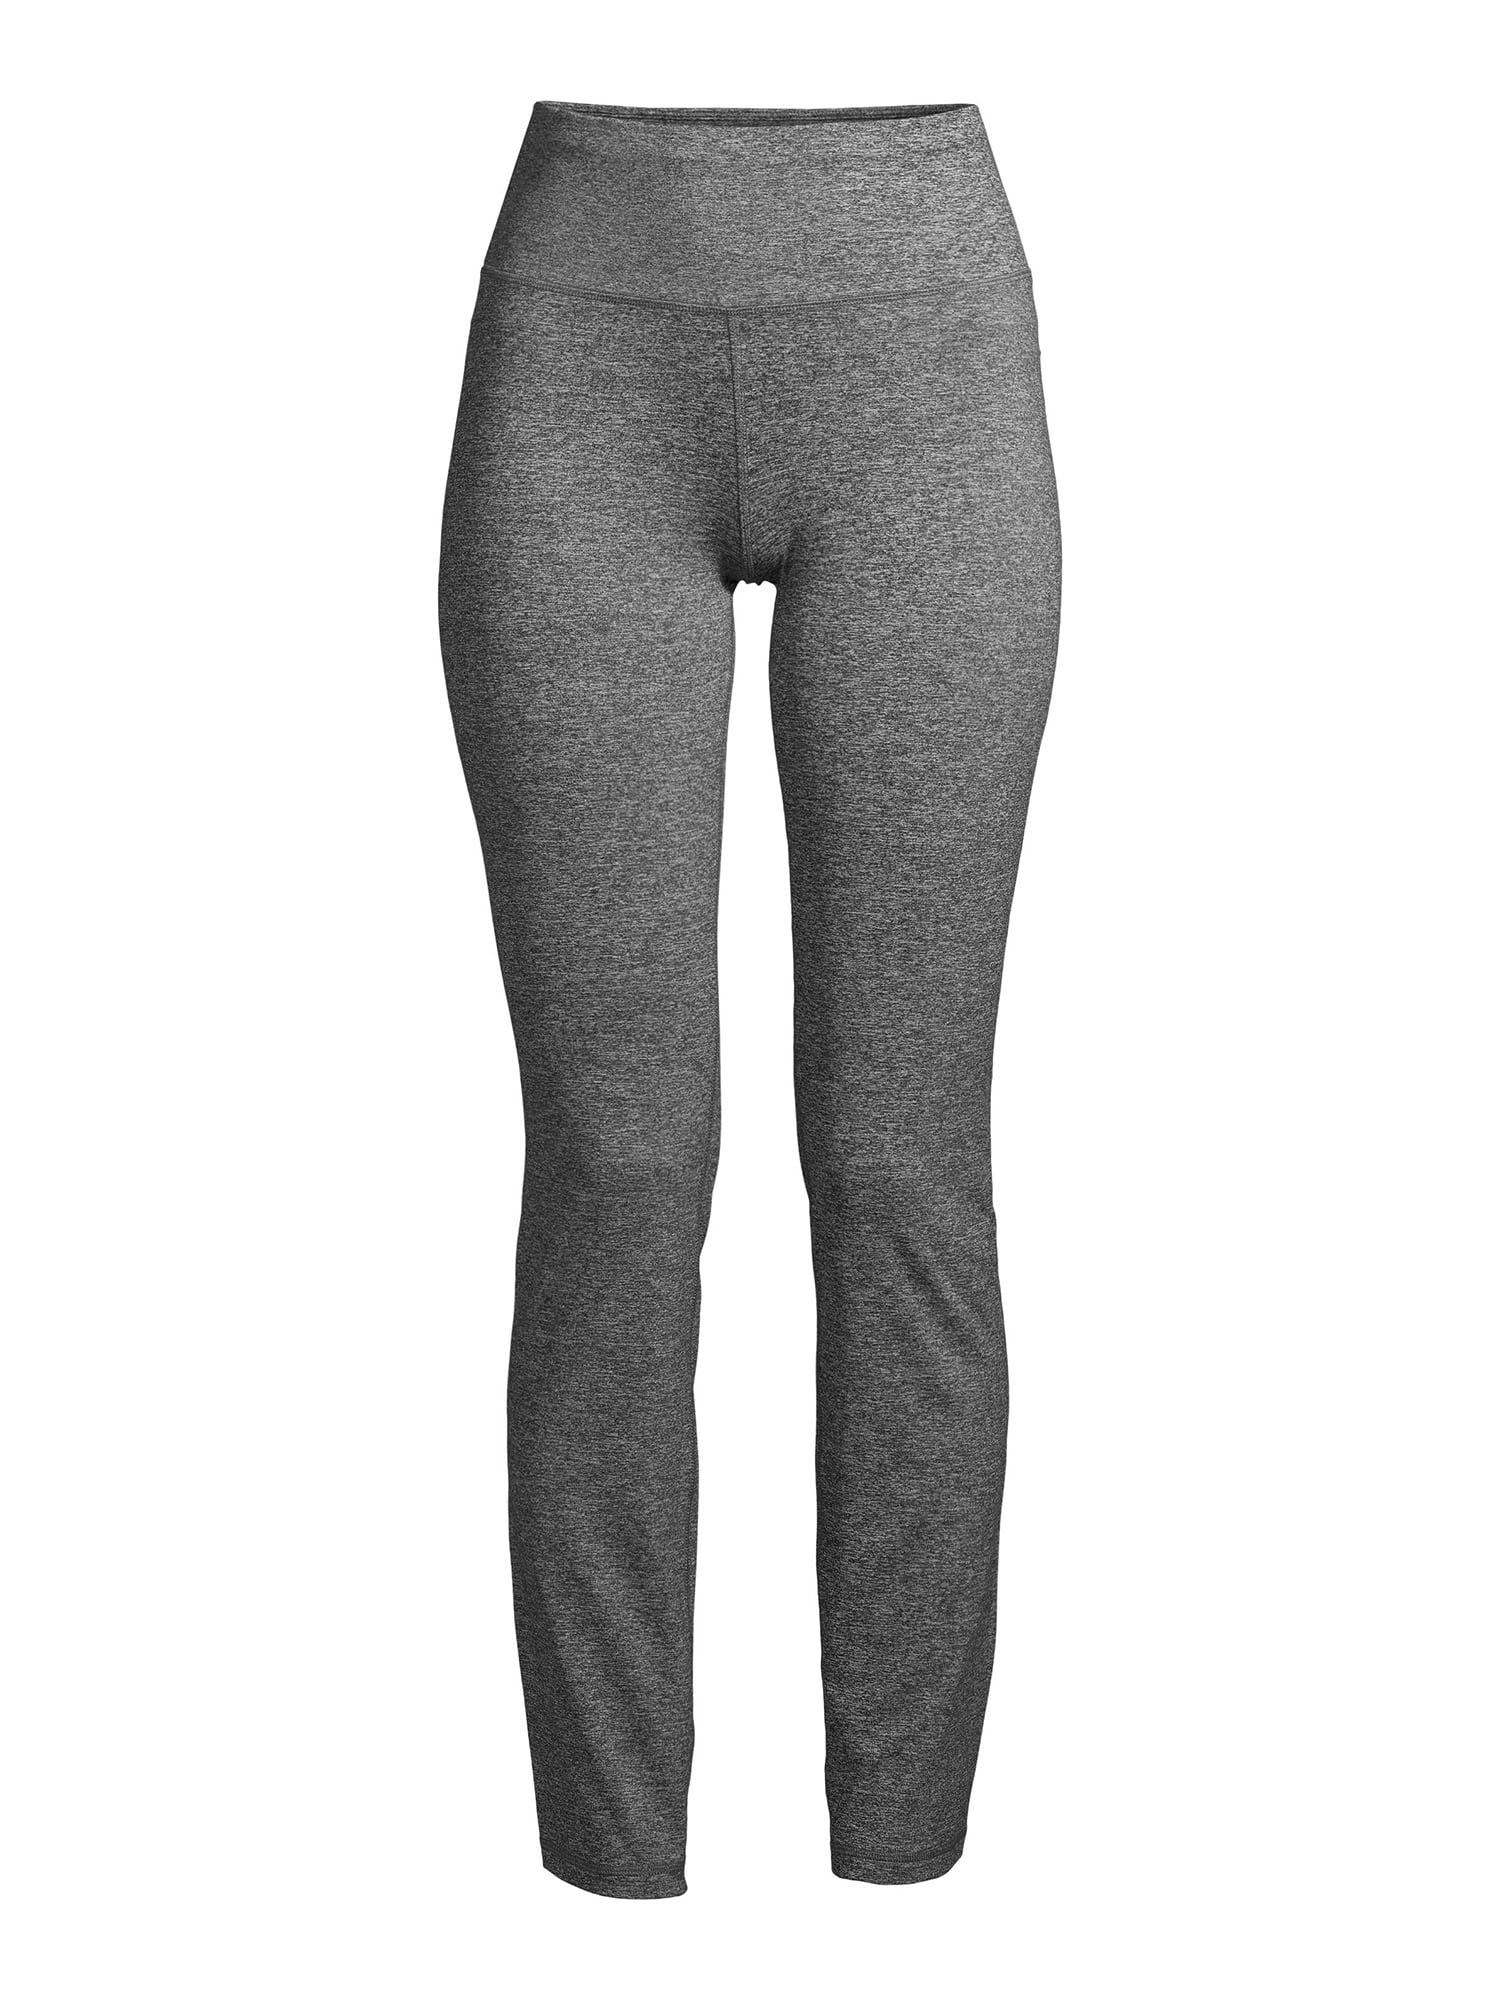 Avia Leggings Active Performance Skinny Pant Grey Melange Small 4P-6P - $23  - From Pearl